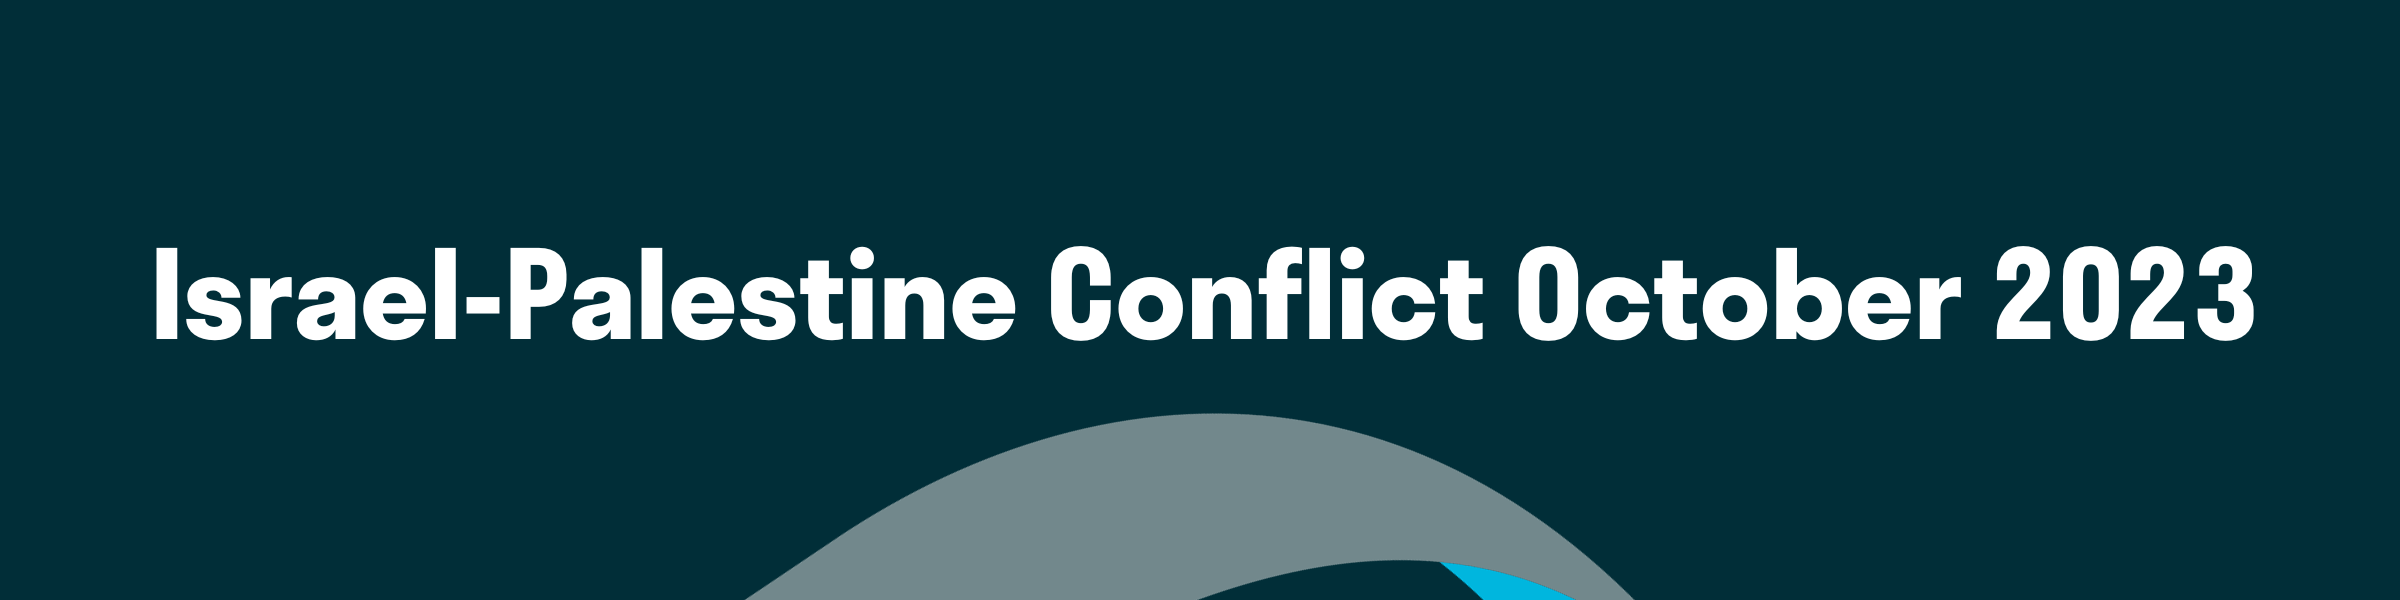 Israel - Palestine Conflict October 2023